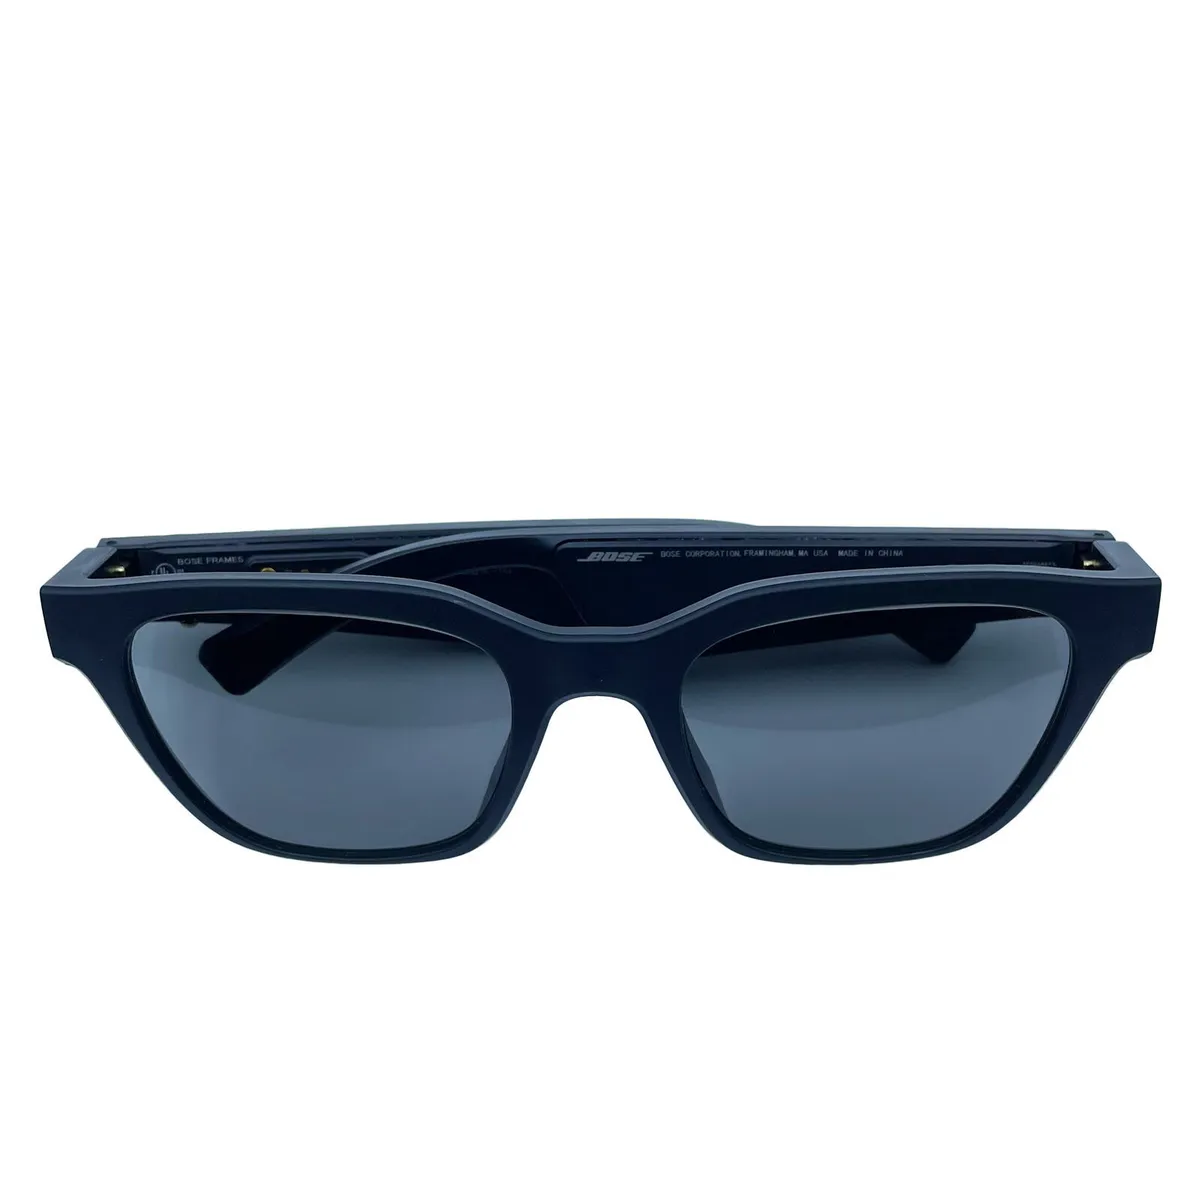 Bose Frames Alto Audio Smart Sunglasses with Open Ear Headphones